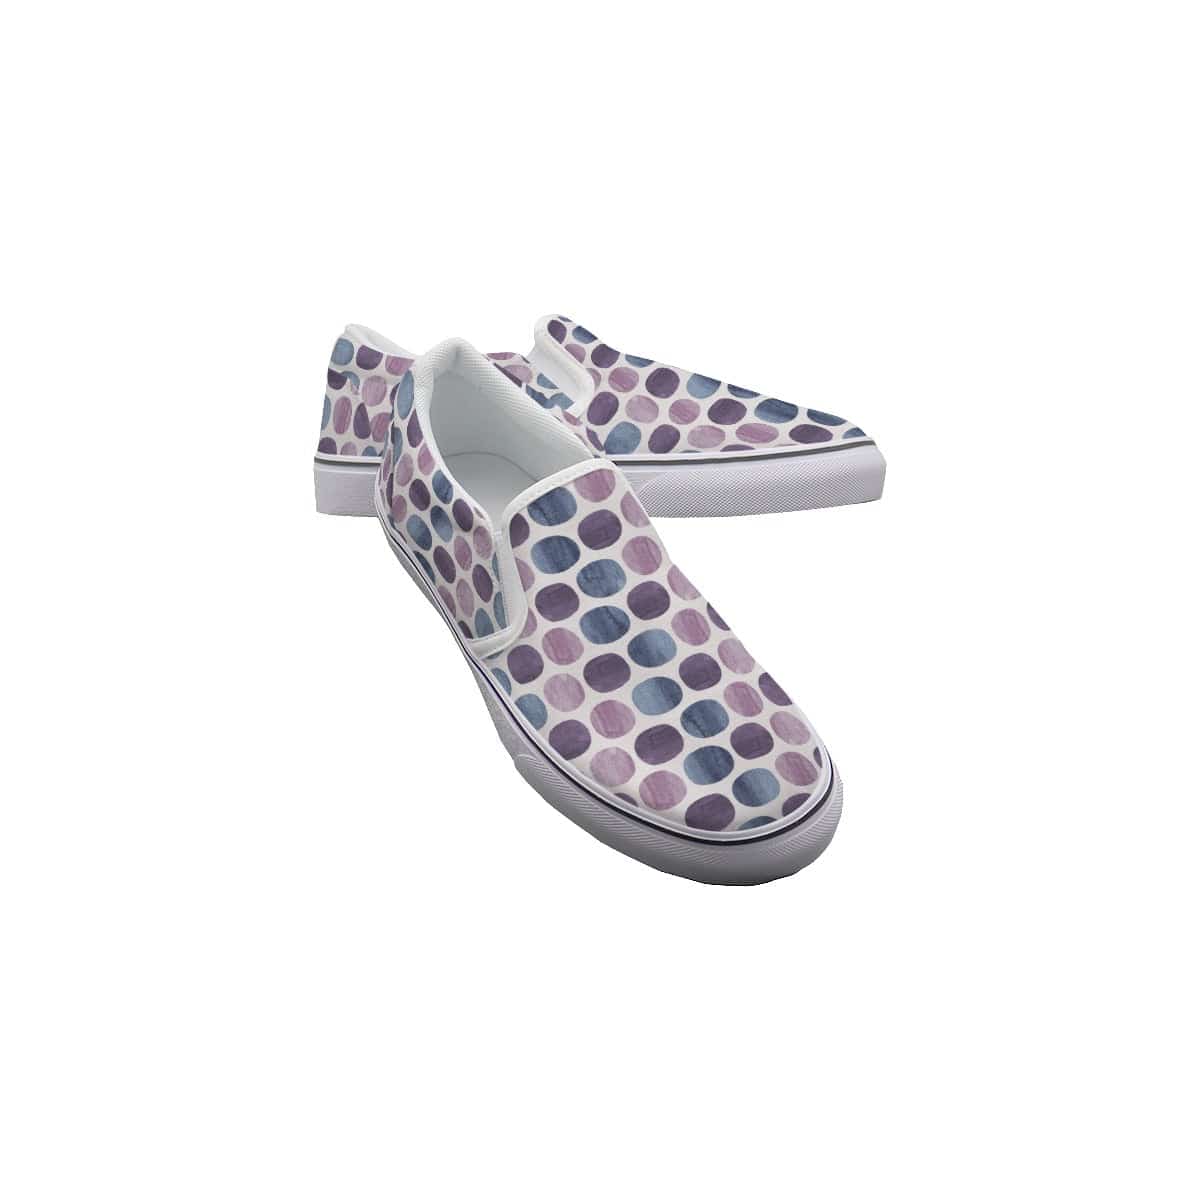 Yoycol White / US6(EUR36) Polka Kicks - Women's Slip On Sneakers